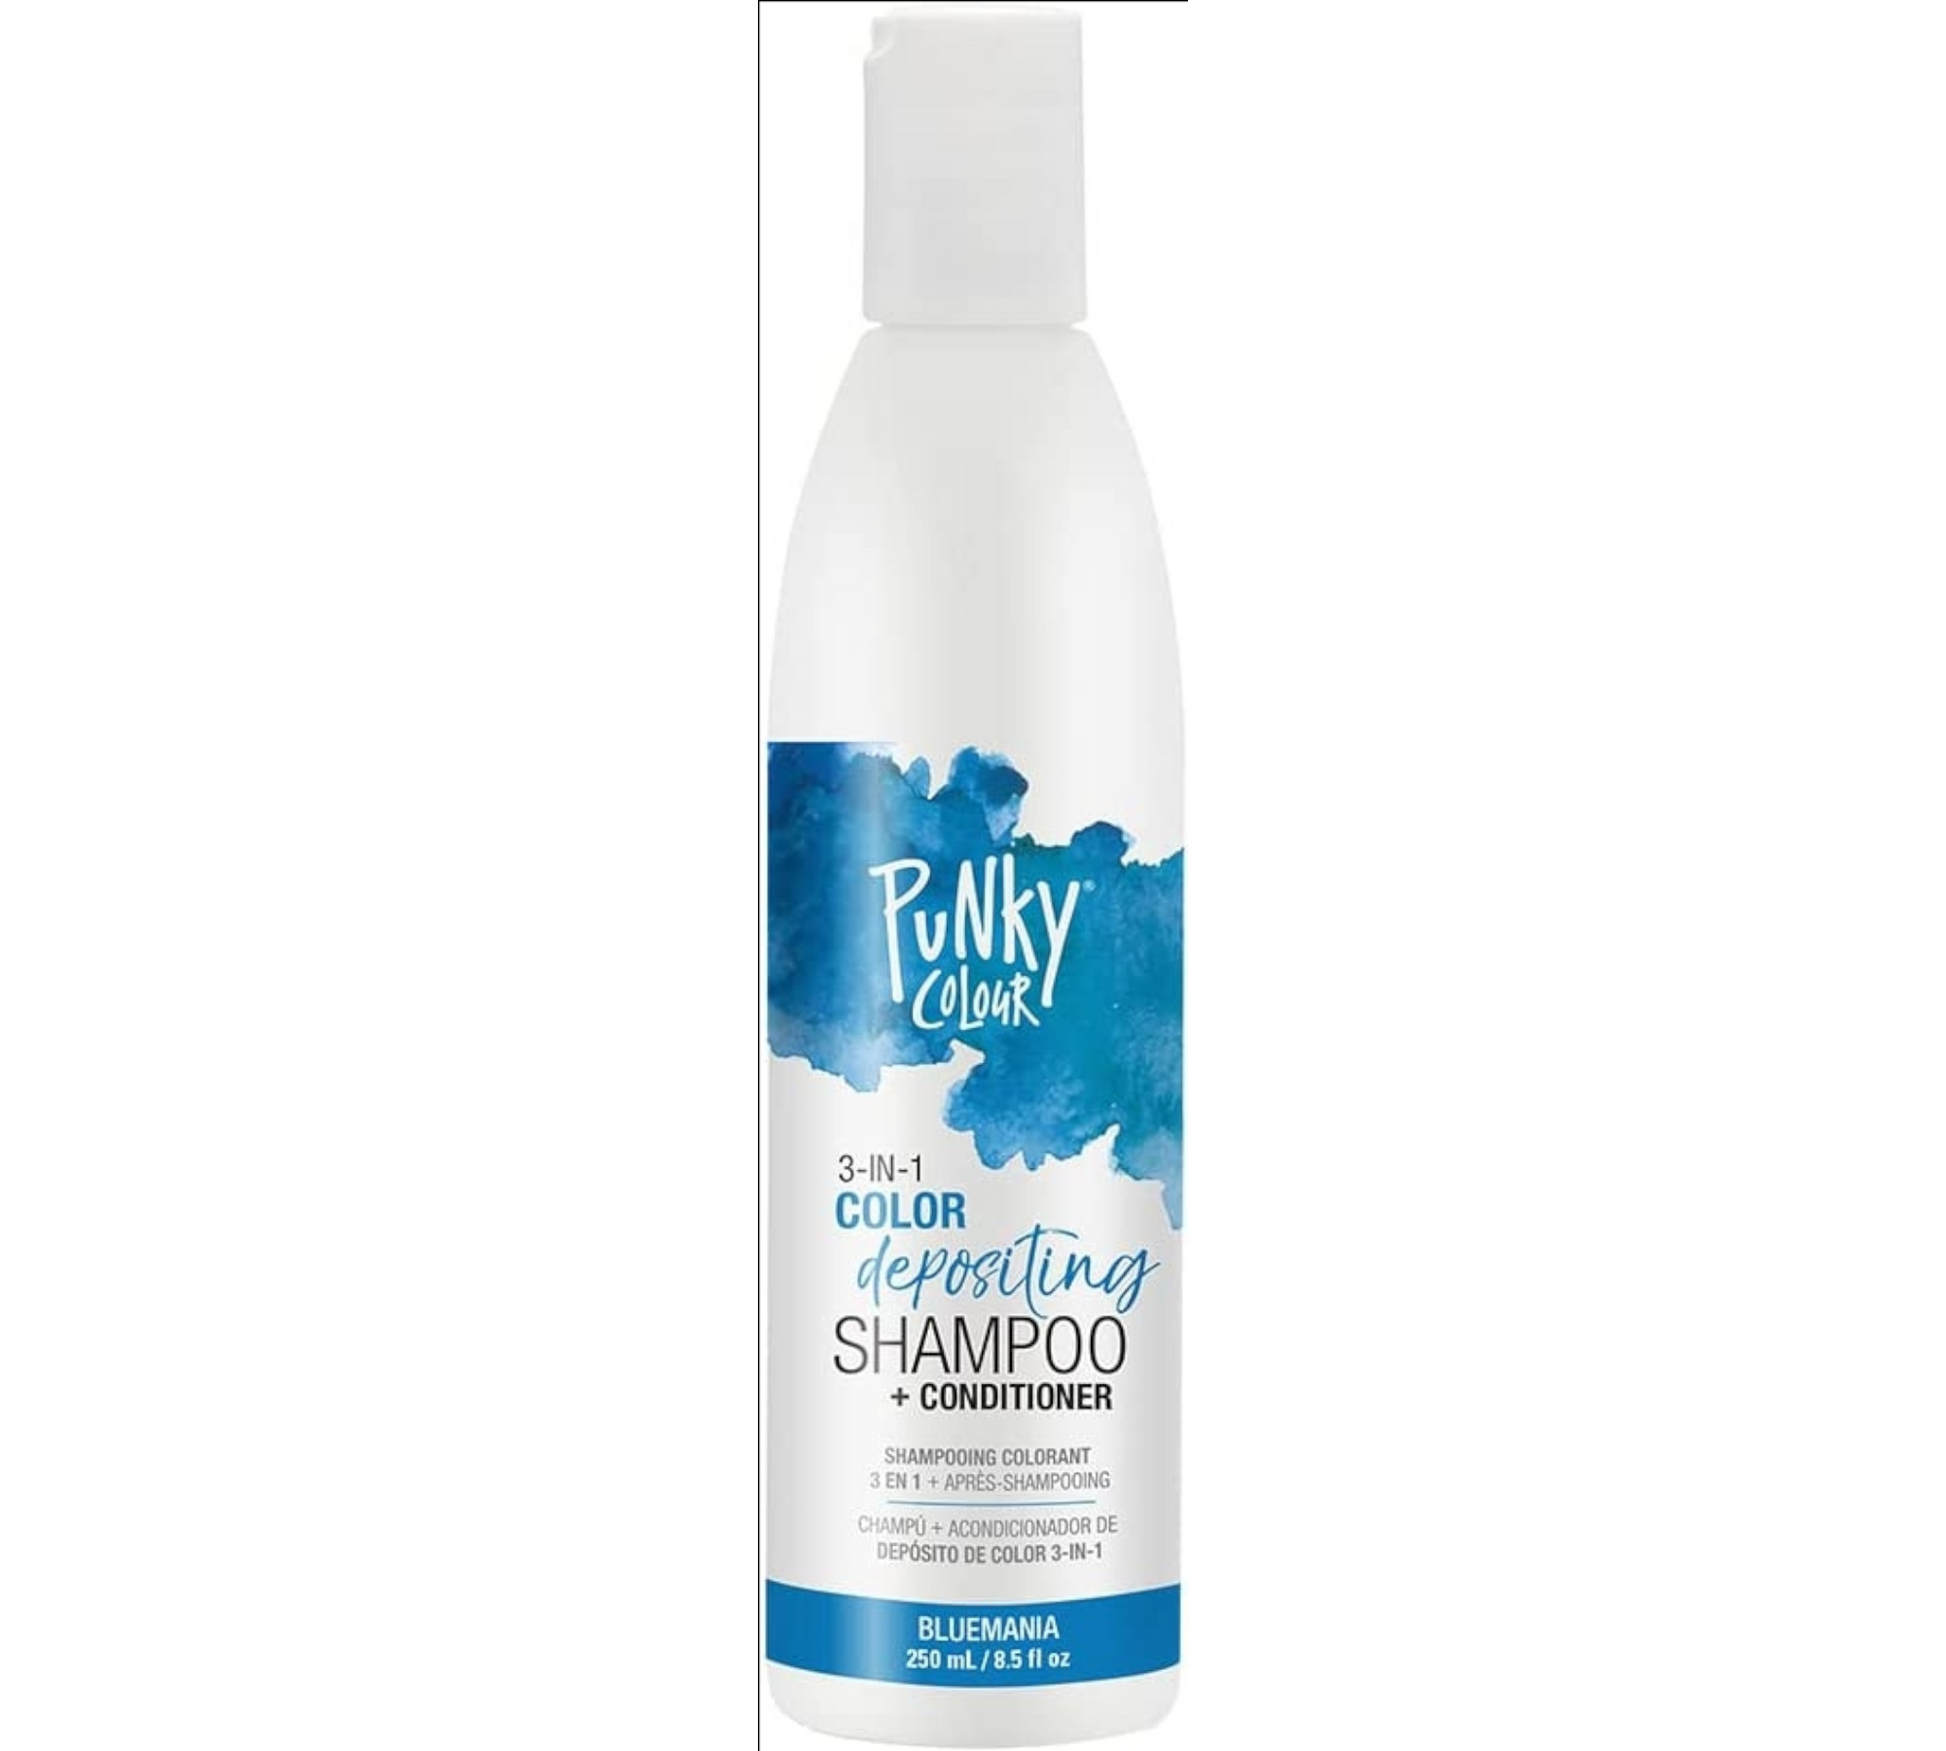 Punky Color Cupid Beauty Supplies Bluemania / 8.5 Fl.Oz Temporary Color Shampoos 3-In-1 Color Depositing Shampoo + Conditioner